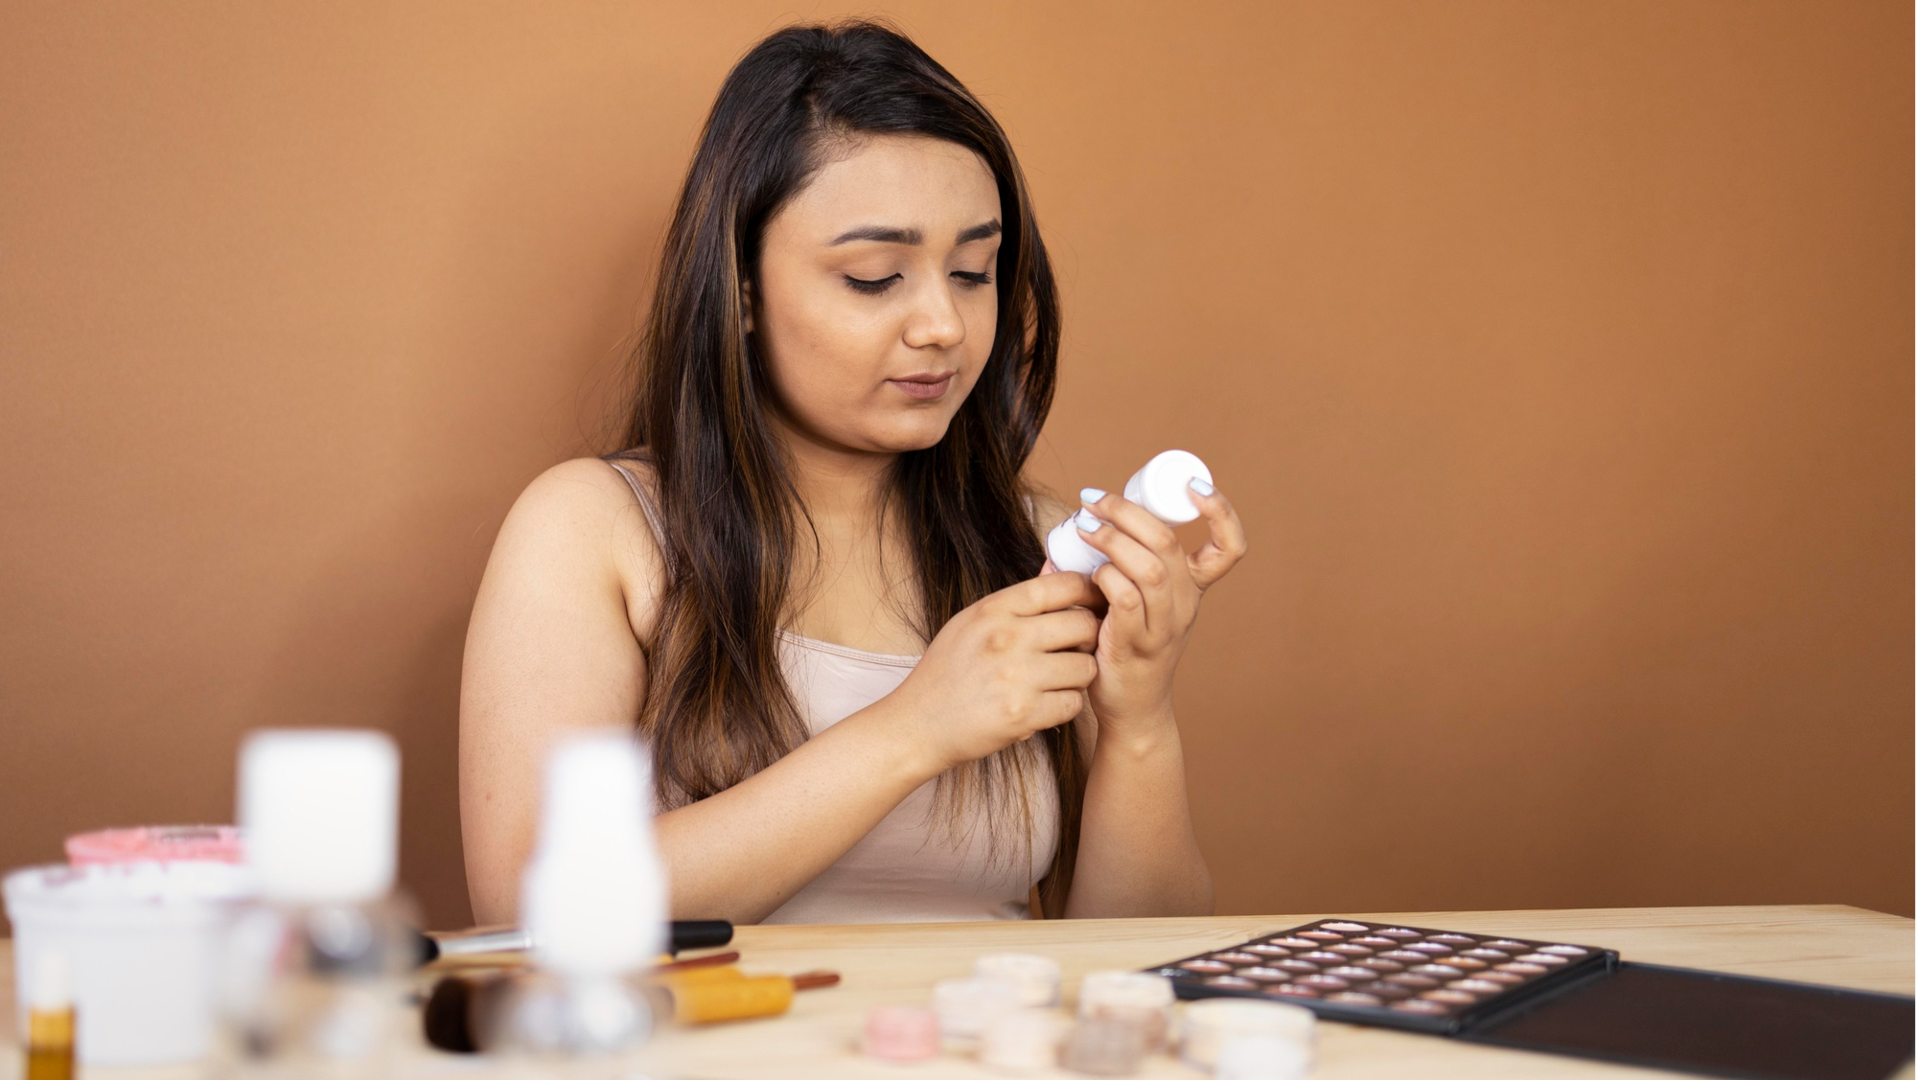 5 useful makeup tips for dry skin beauties